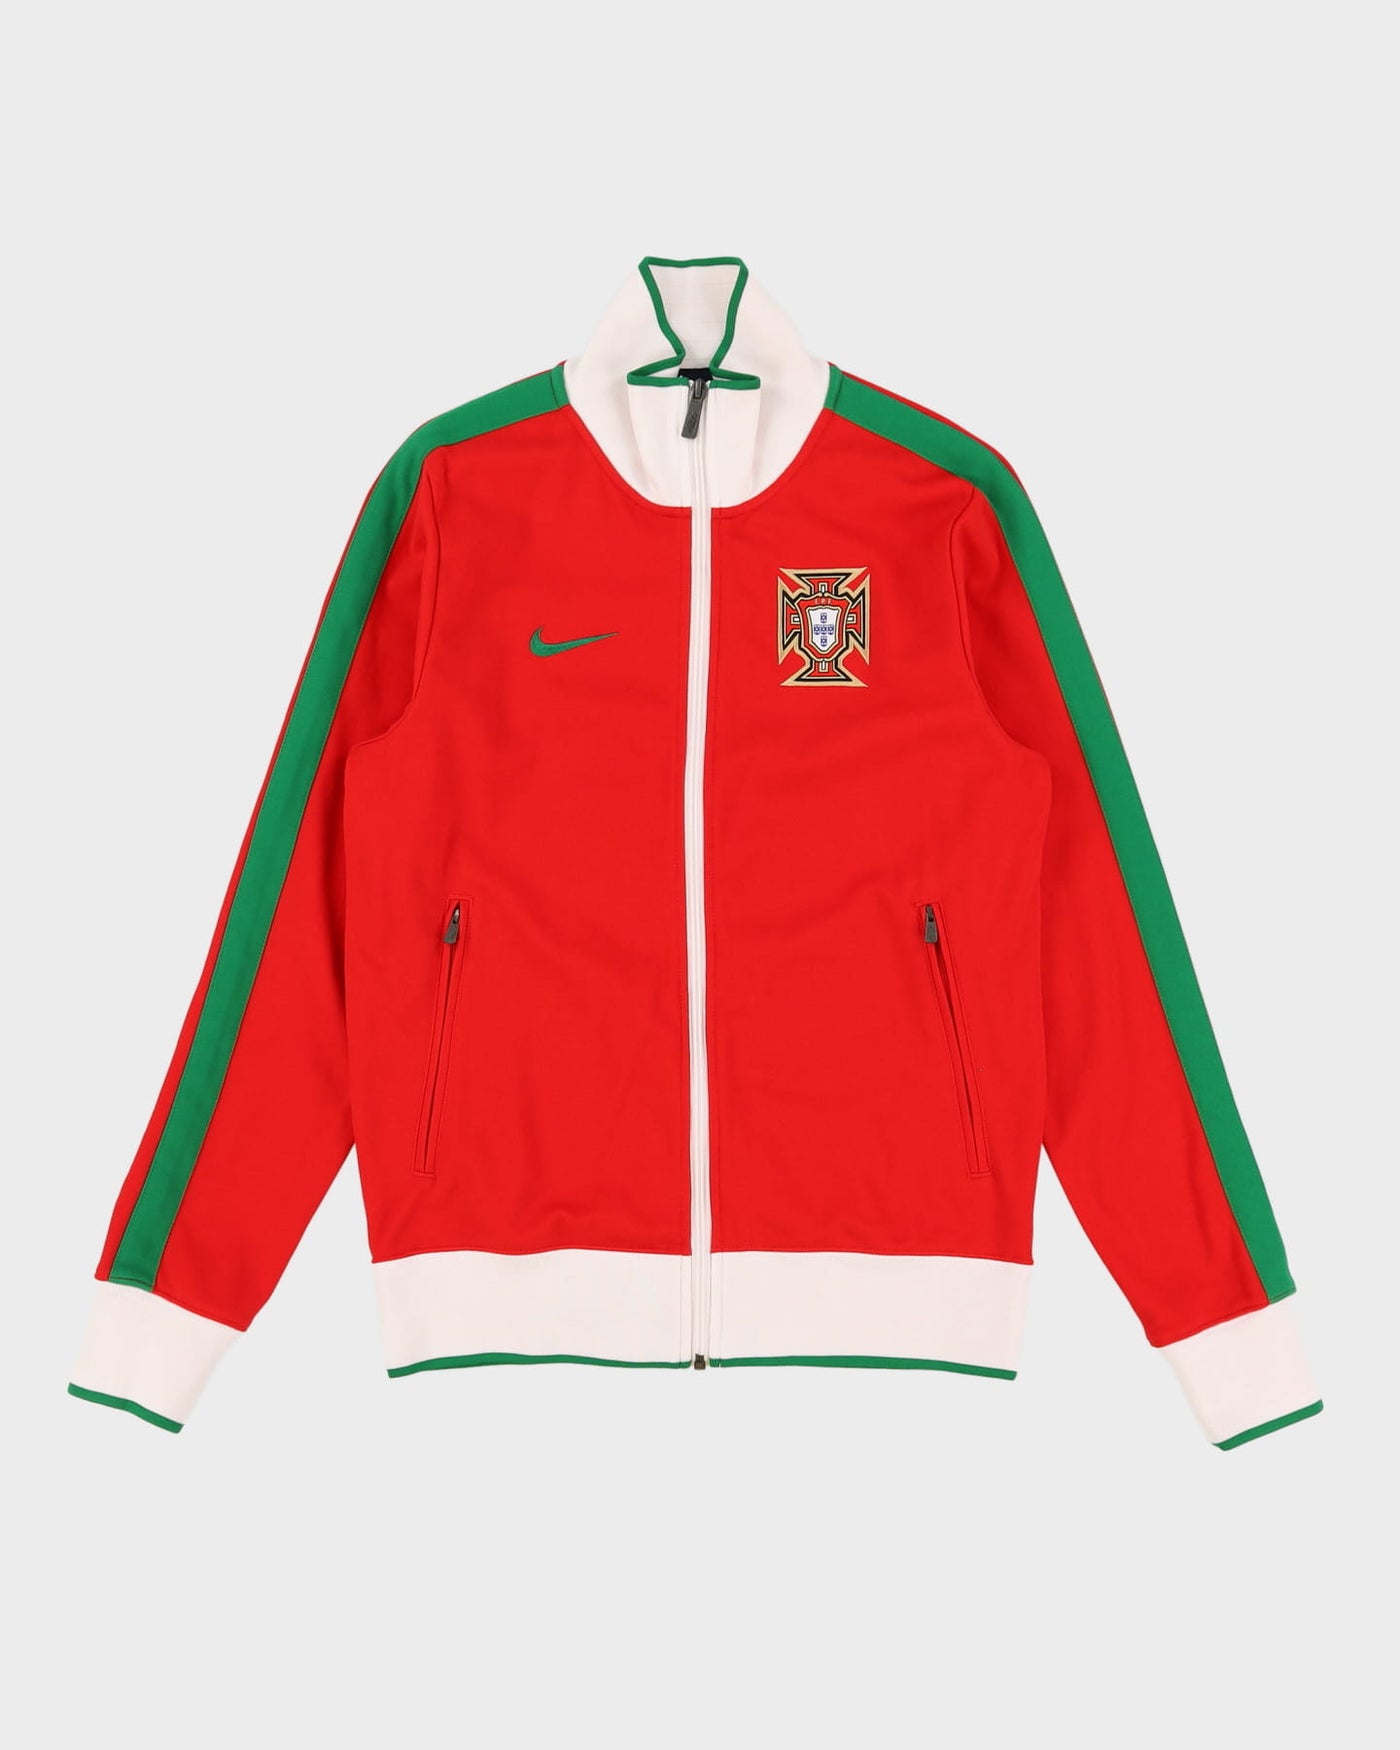 Forudsætning Mirakuløs Crack pot 00'erne Nike portugal rød/grøn træningsjakke - s – Rokit